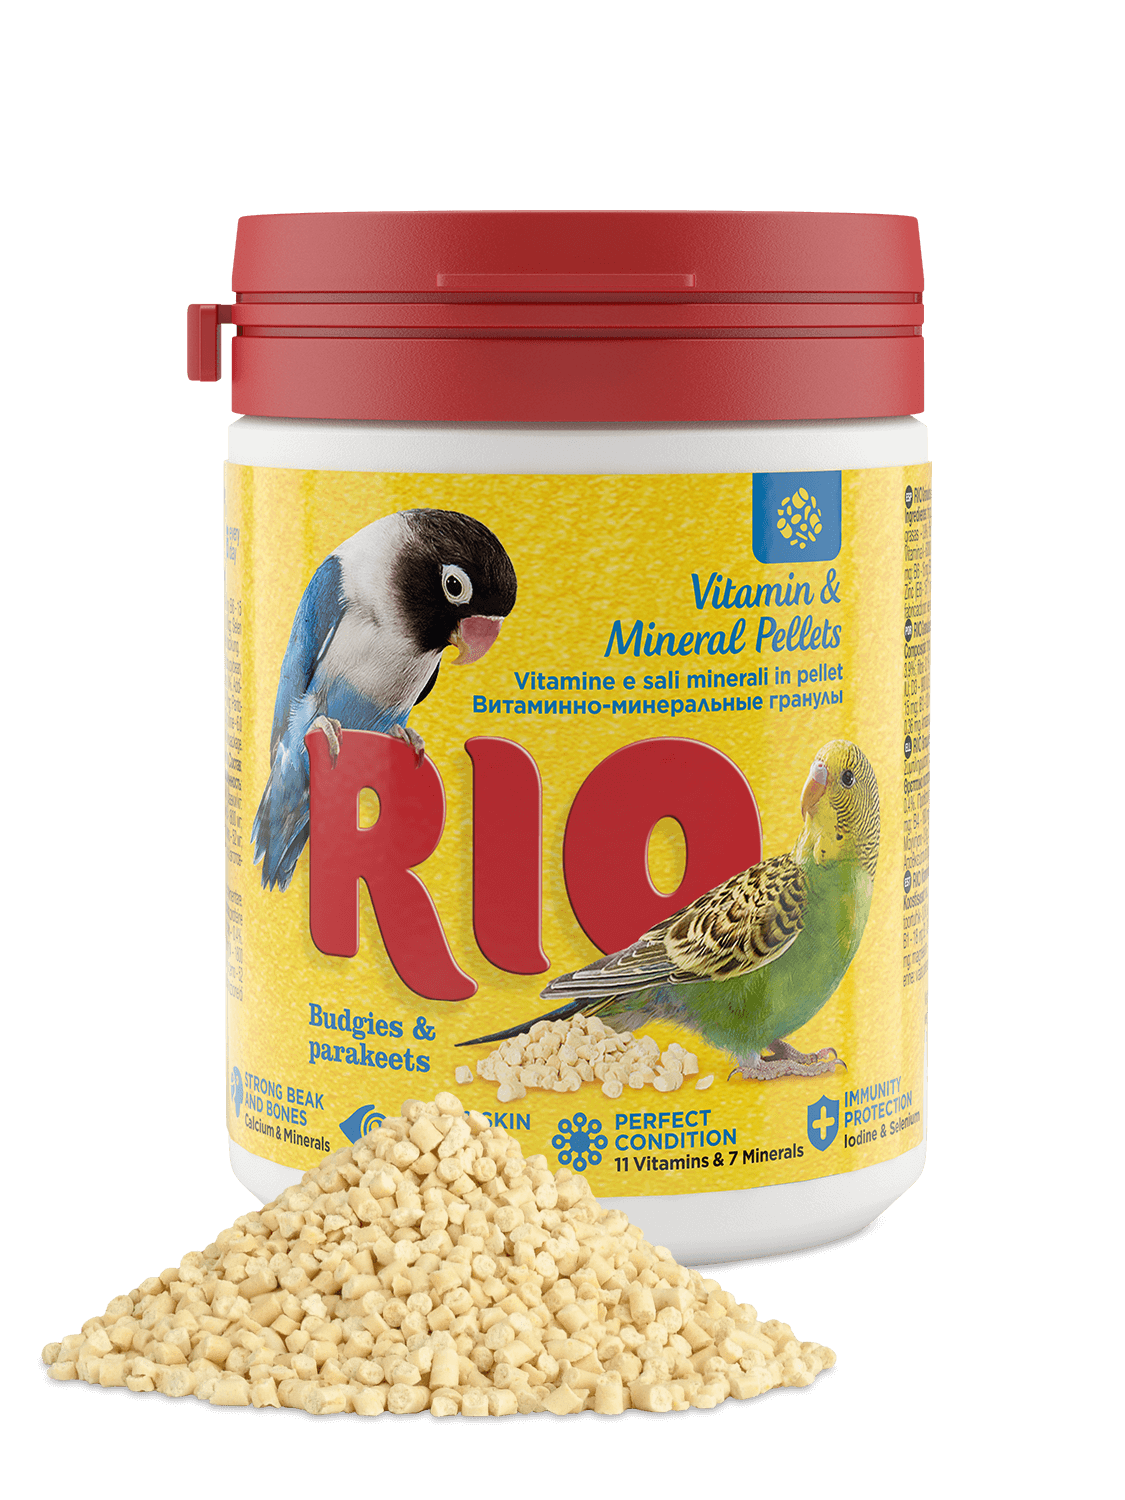 RIO vitaminove a mineralni pelety pro andulky a stredni papousky 120g